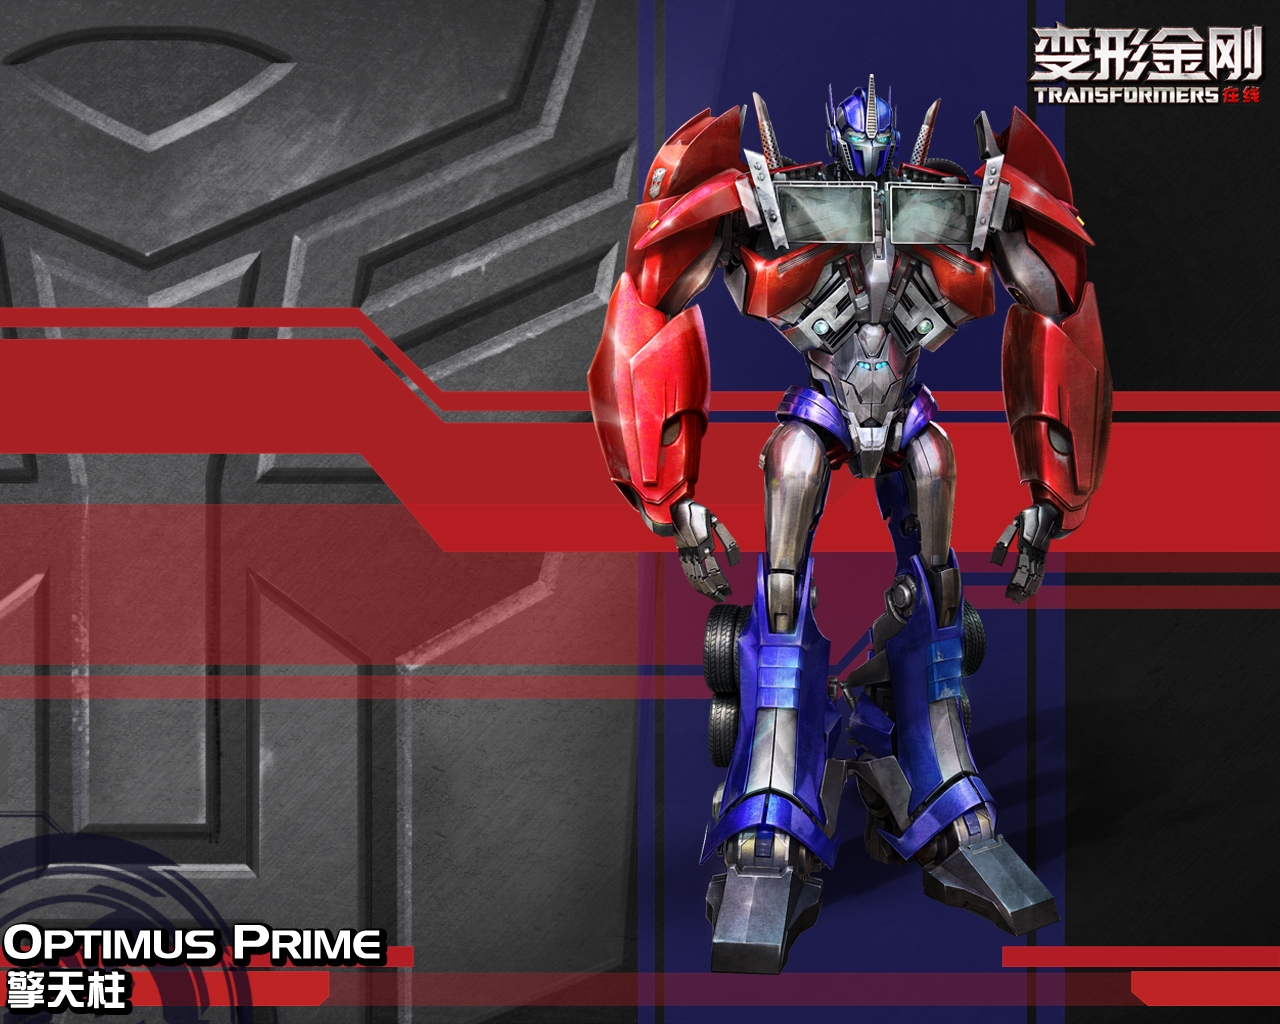 Transformers Prime images Transformers Prime HD wallpaper